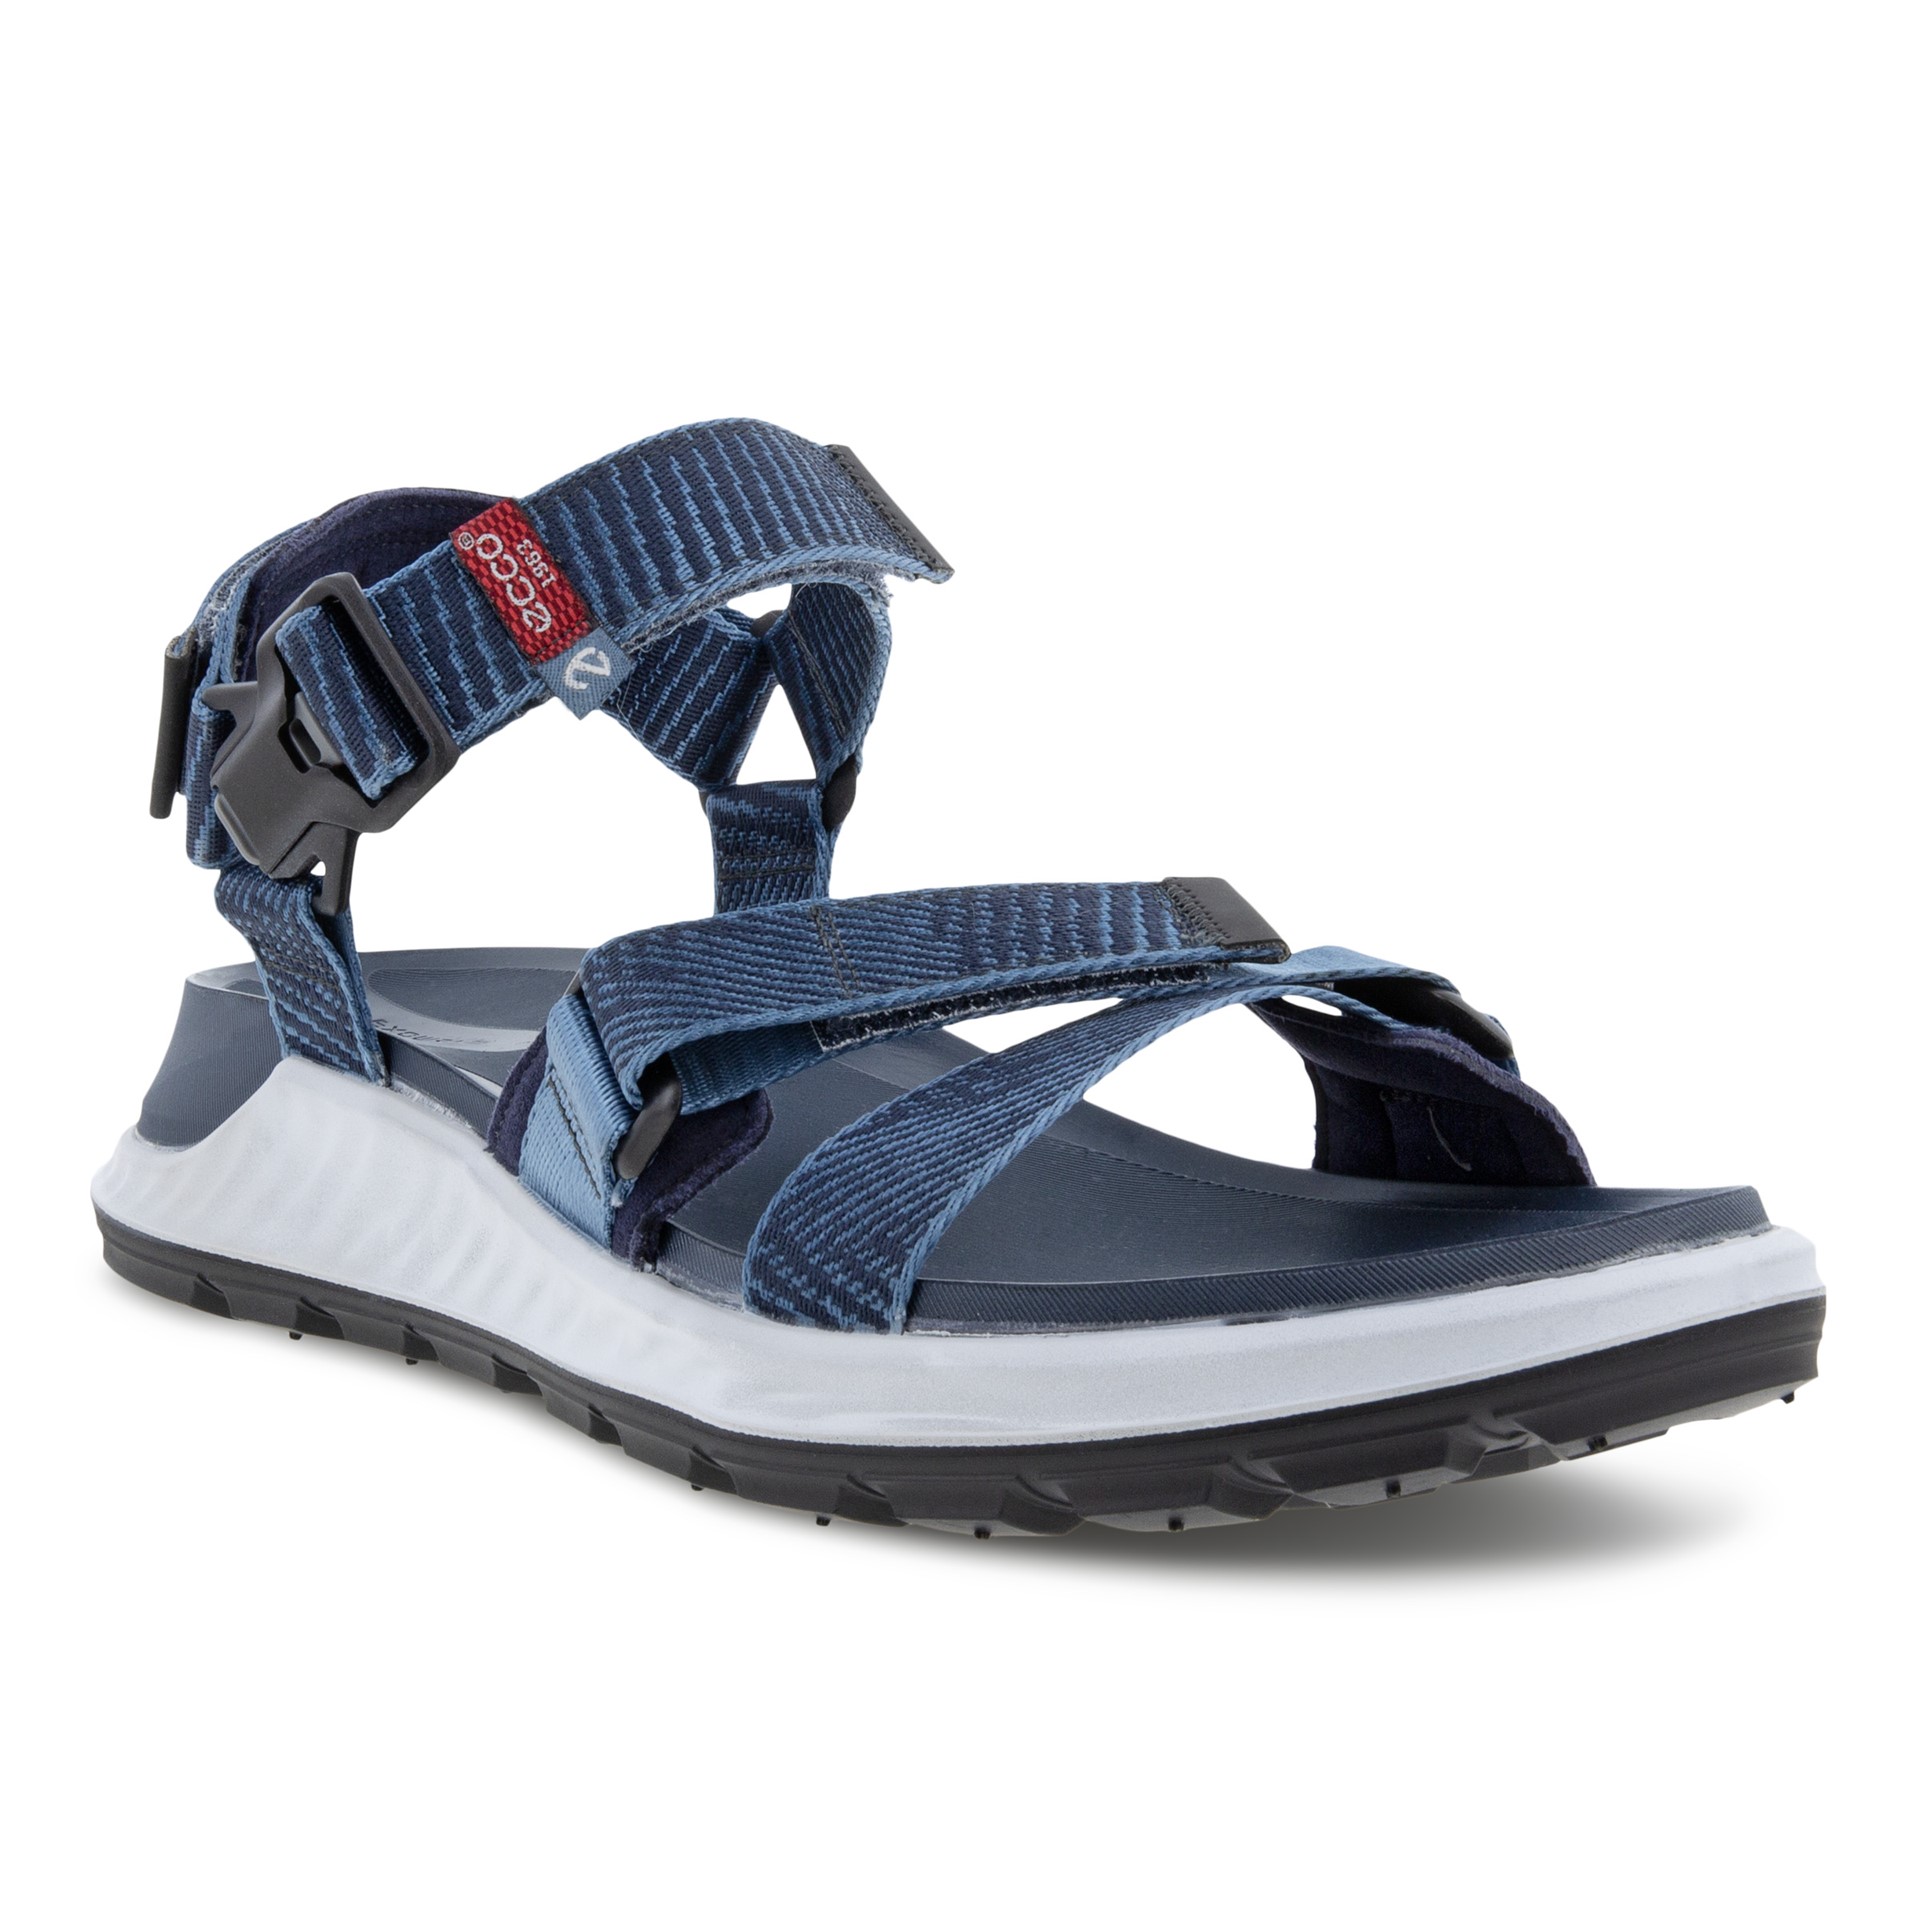 Ecco Exowrap 81184456923 M Retro Blue. Blå lækker outdoor sandal, behagelig og cool, til de fleste dress. -